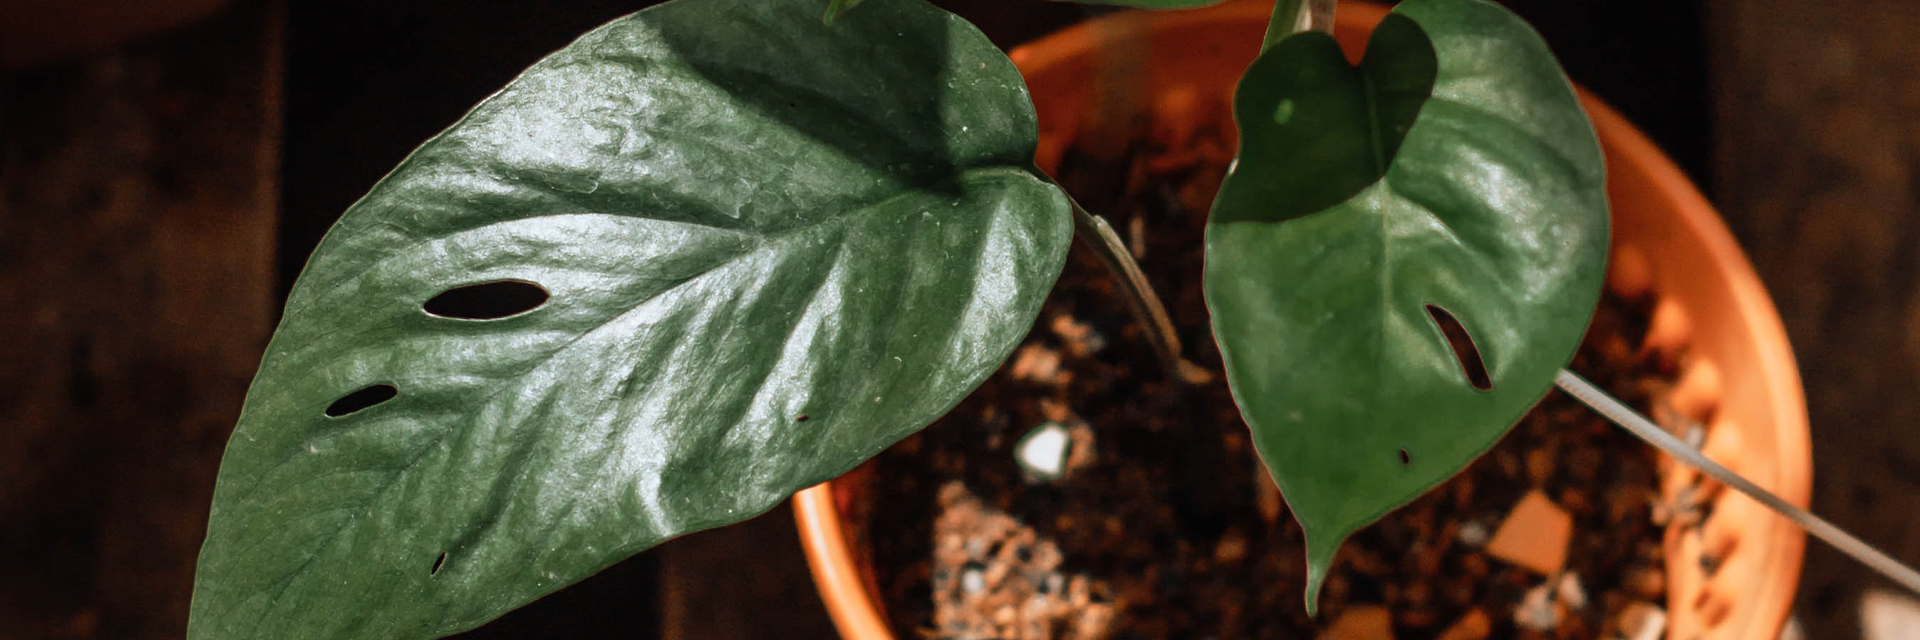 How-to-propagate-indoor-plants